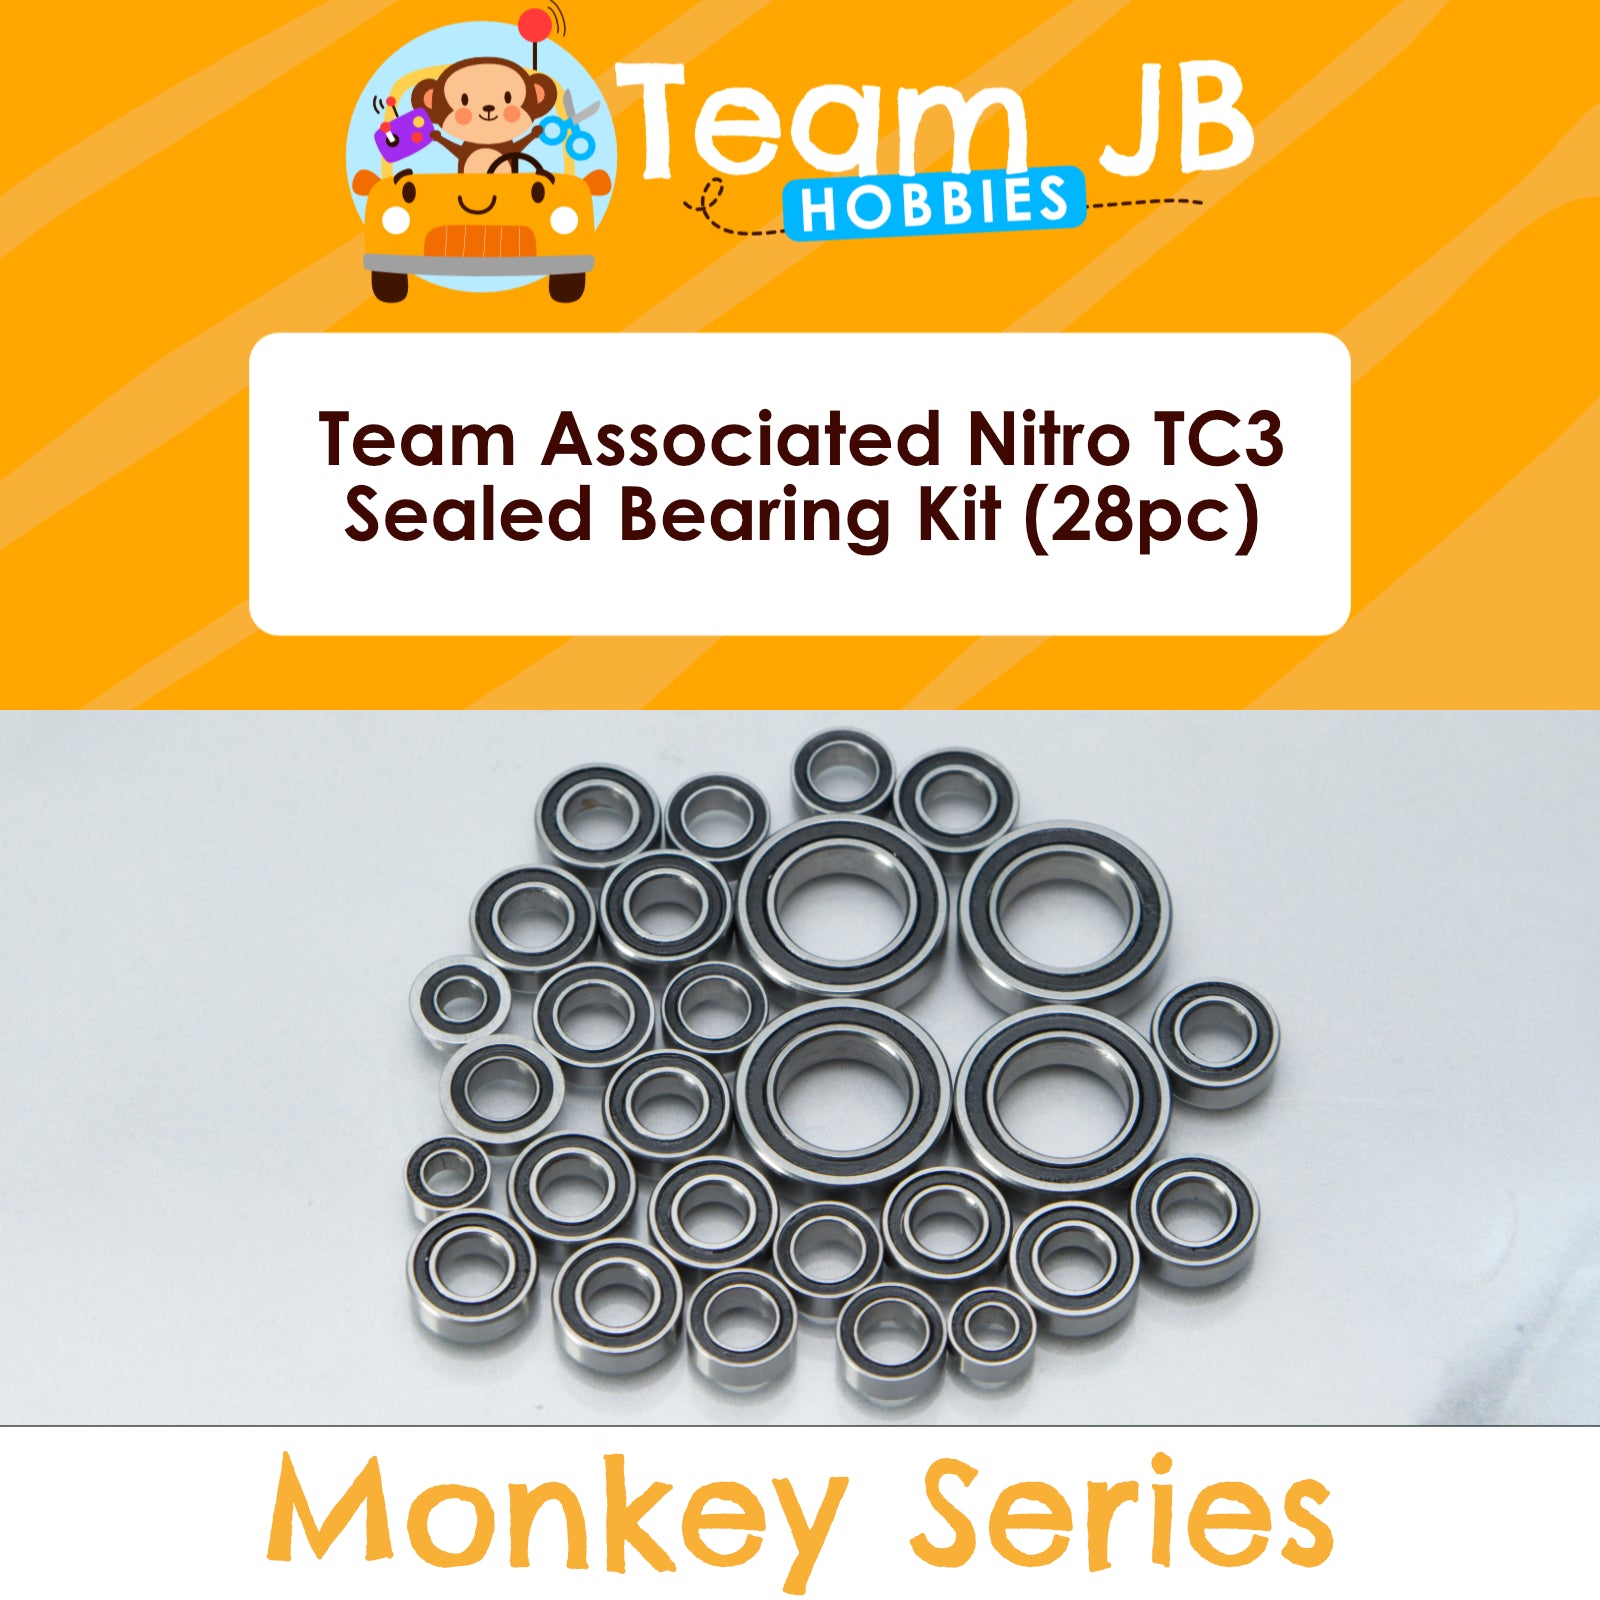 Team Associated Nitro TC3 - Sealed Bearing Kit